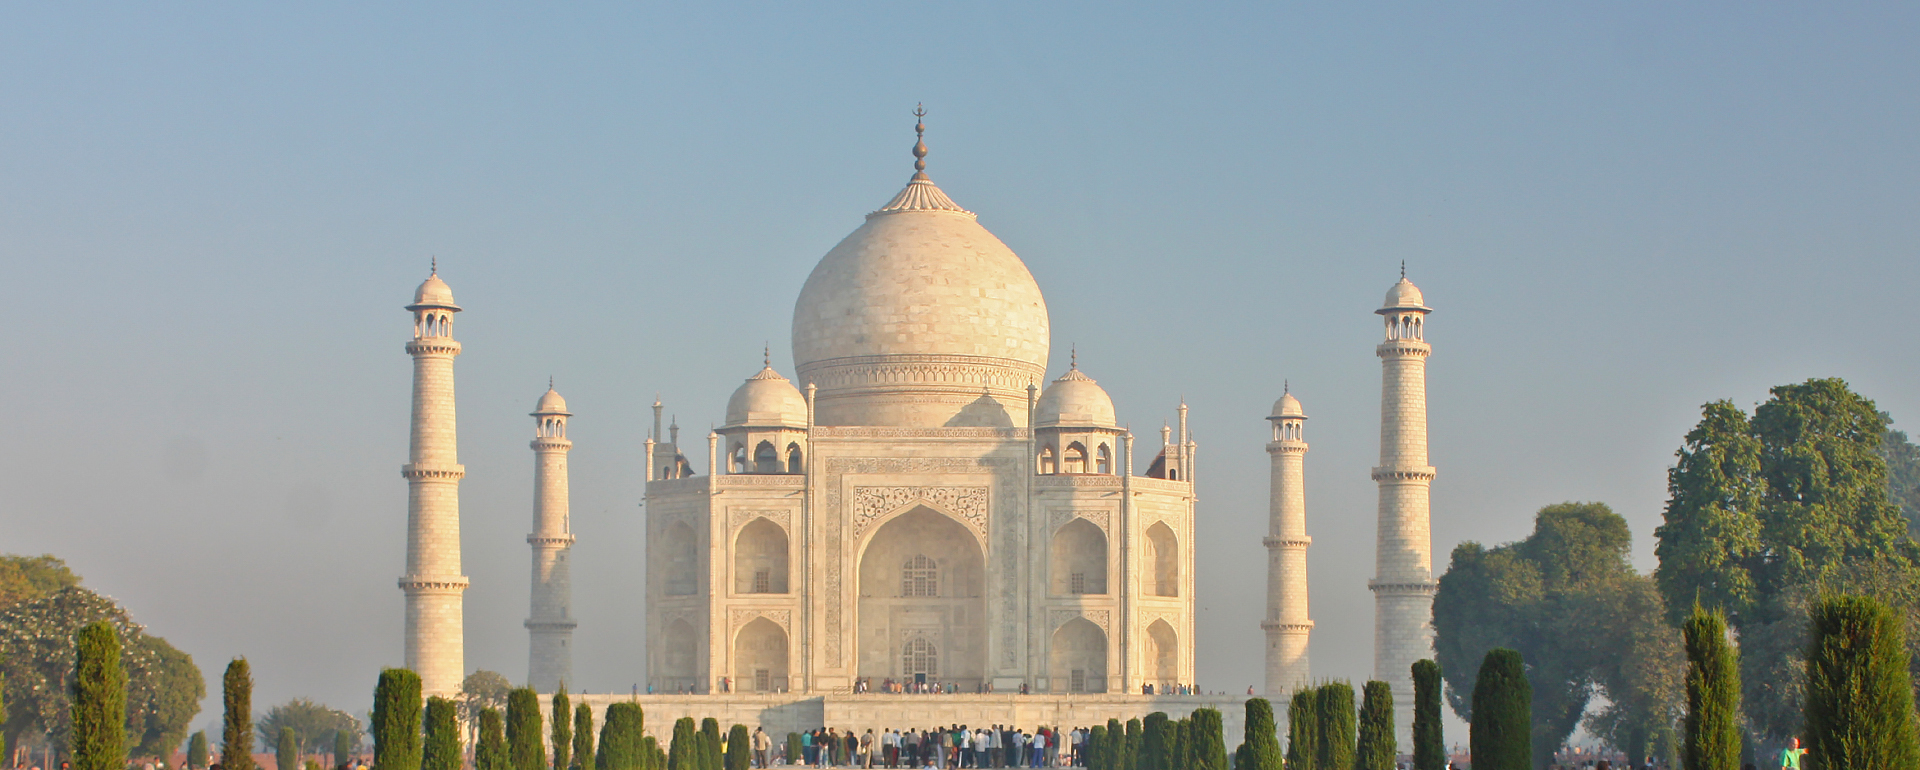 Radreise Rajasthan Indien Taj Mahal